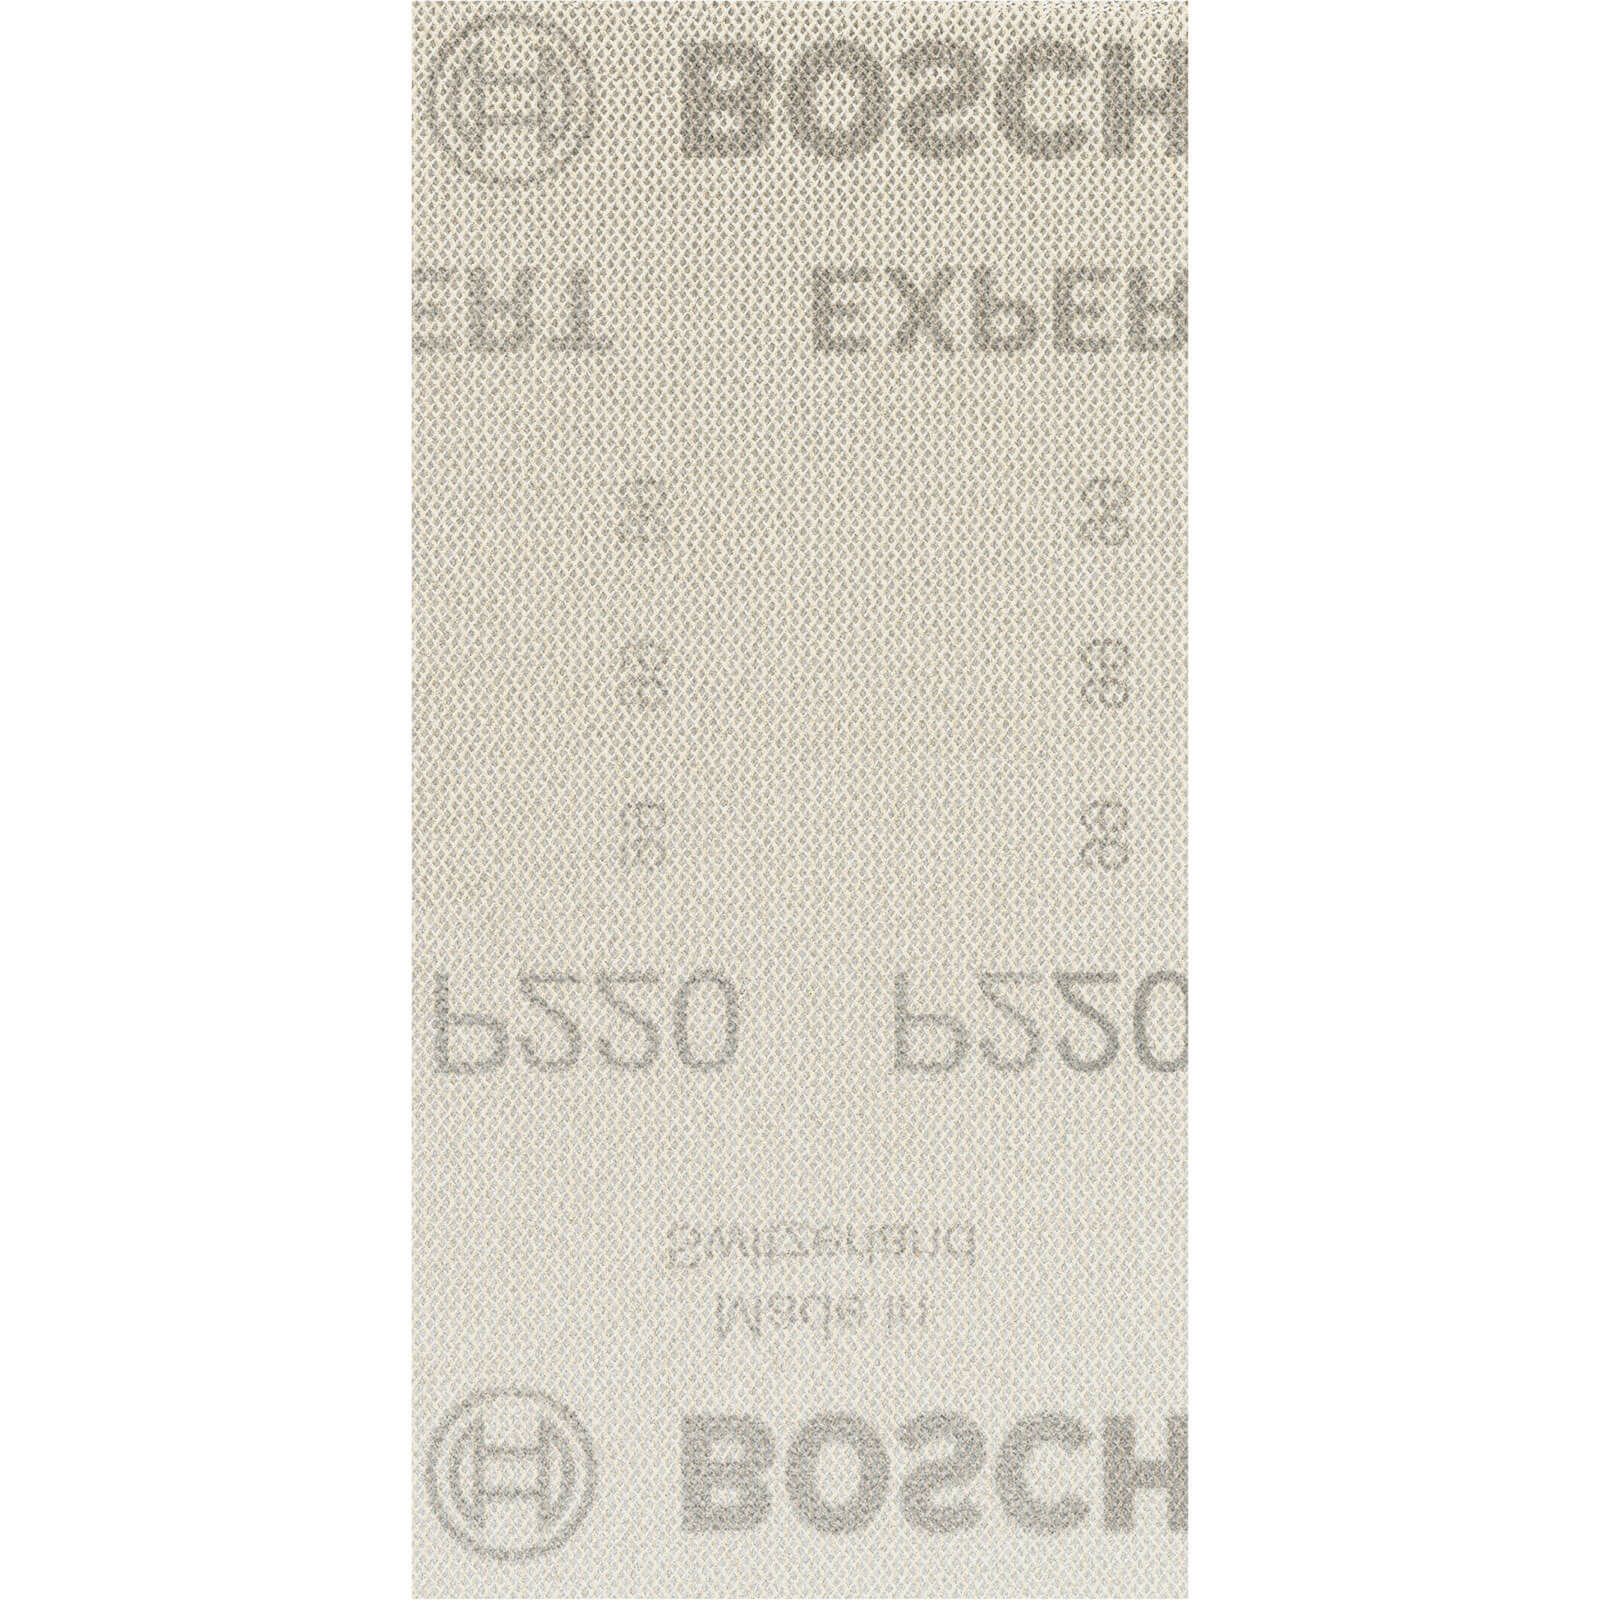 Image of Bosch Expert M480 93mm x 186mm Net Abrasive Sanding Sheets 93mm x 186mm 220g Pack of 50